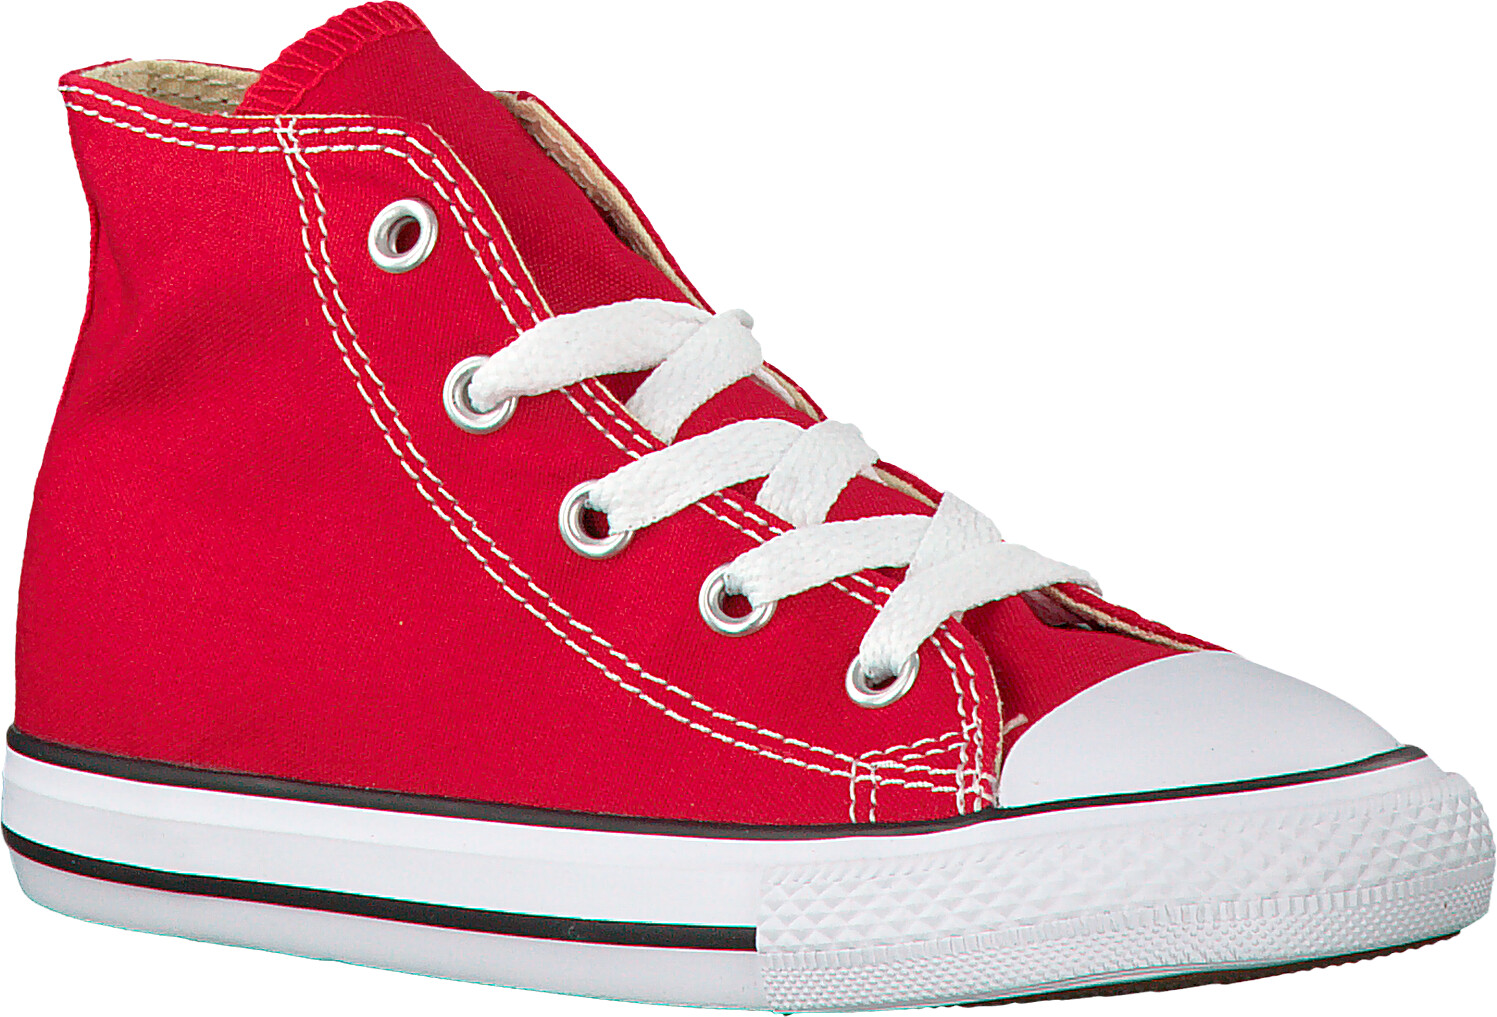 Converse Chuck Taylor All Star Hi Kids red ab 29,90 € | Preisvergleich bei